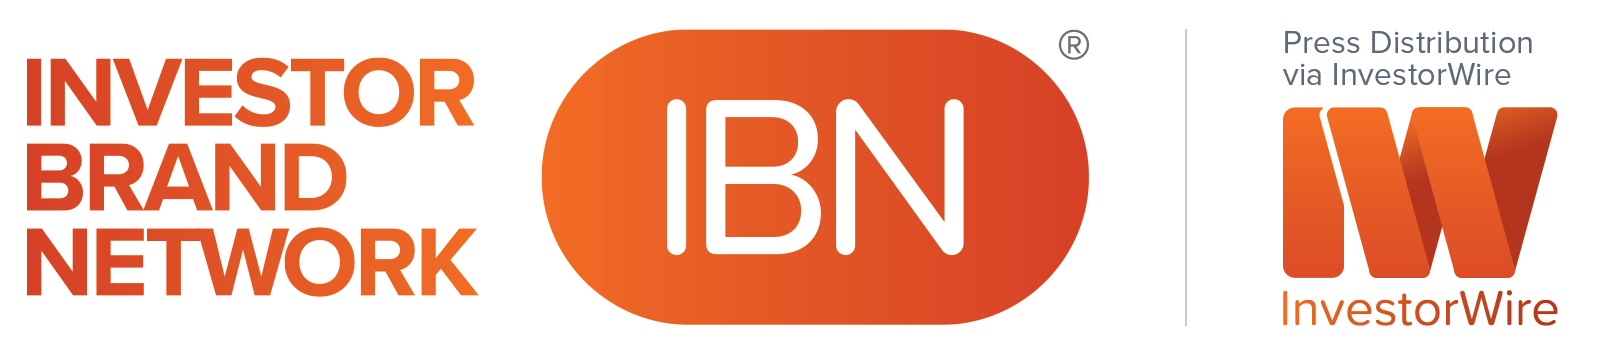 IBN to Serve as Media Sponsor for Quantum Miami